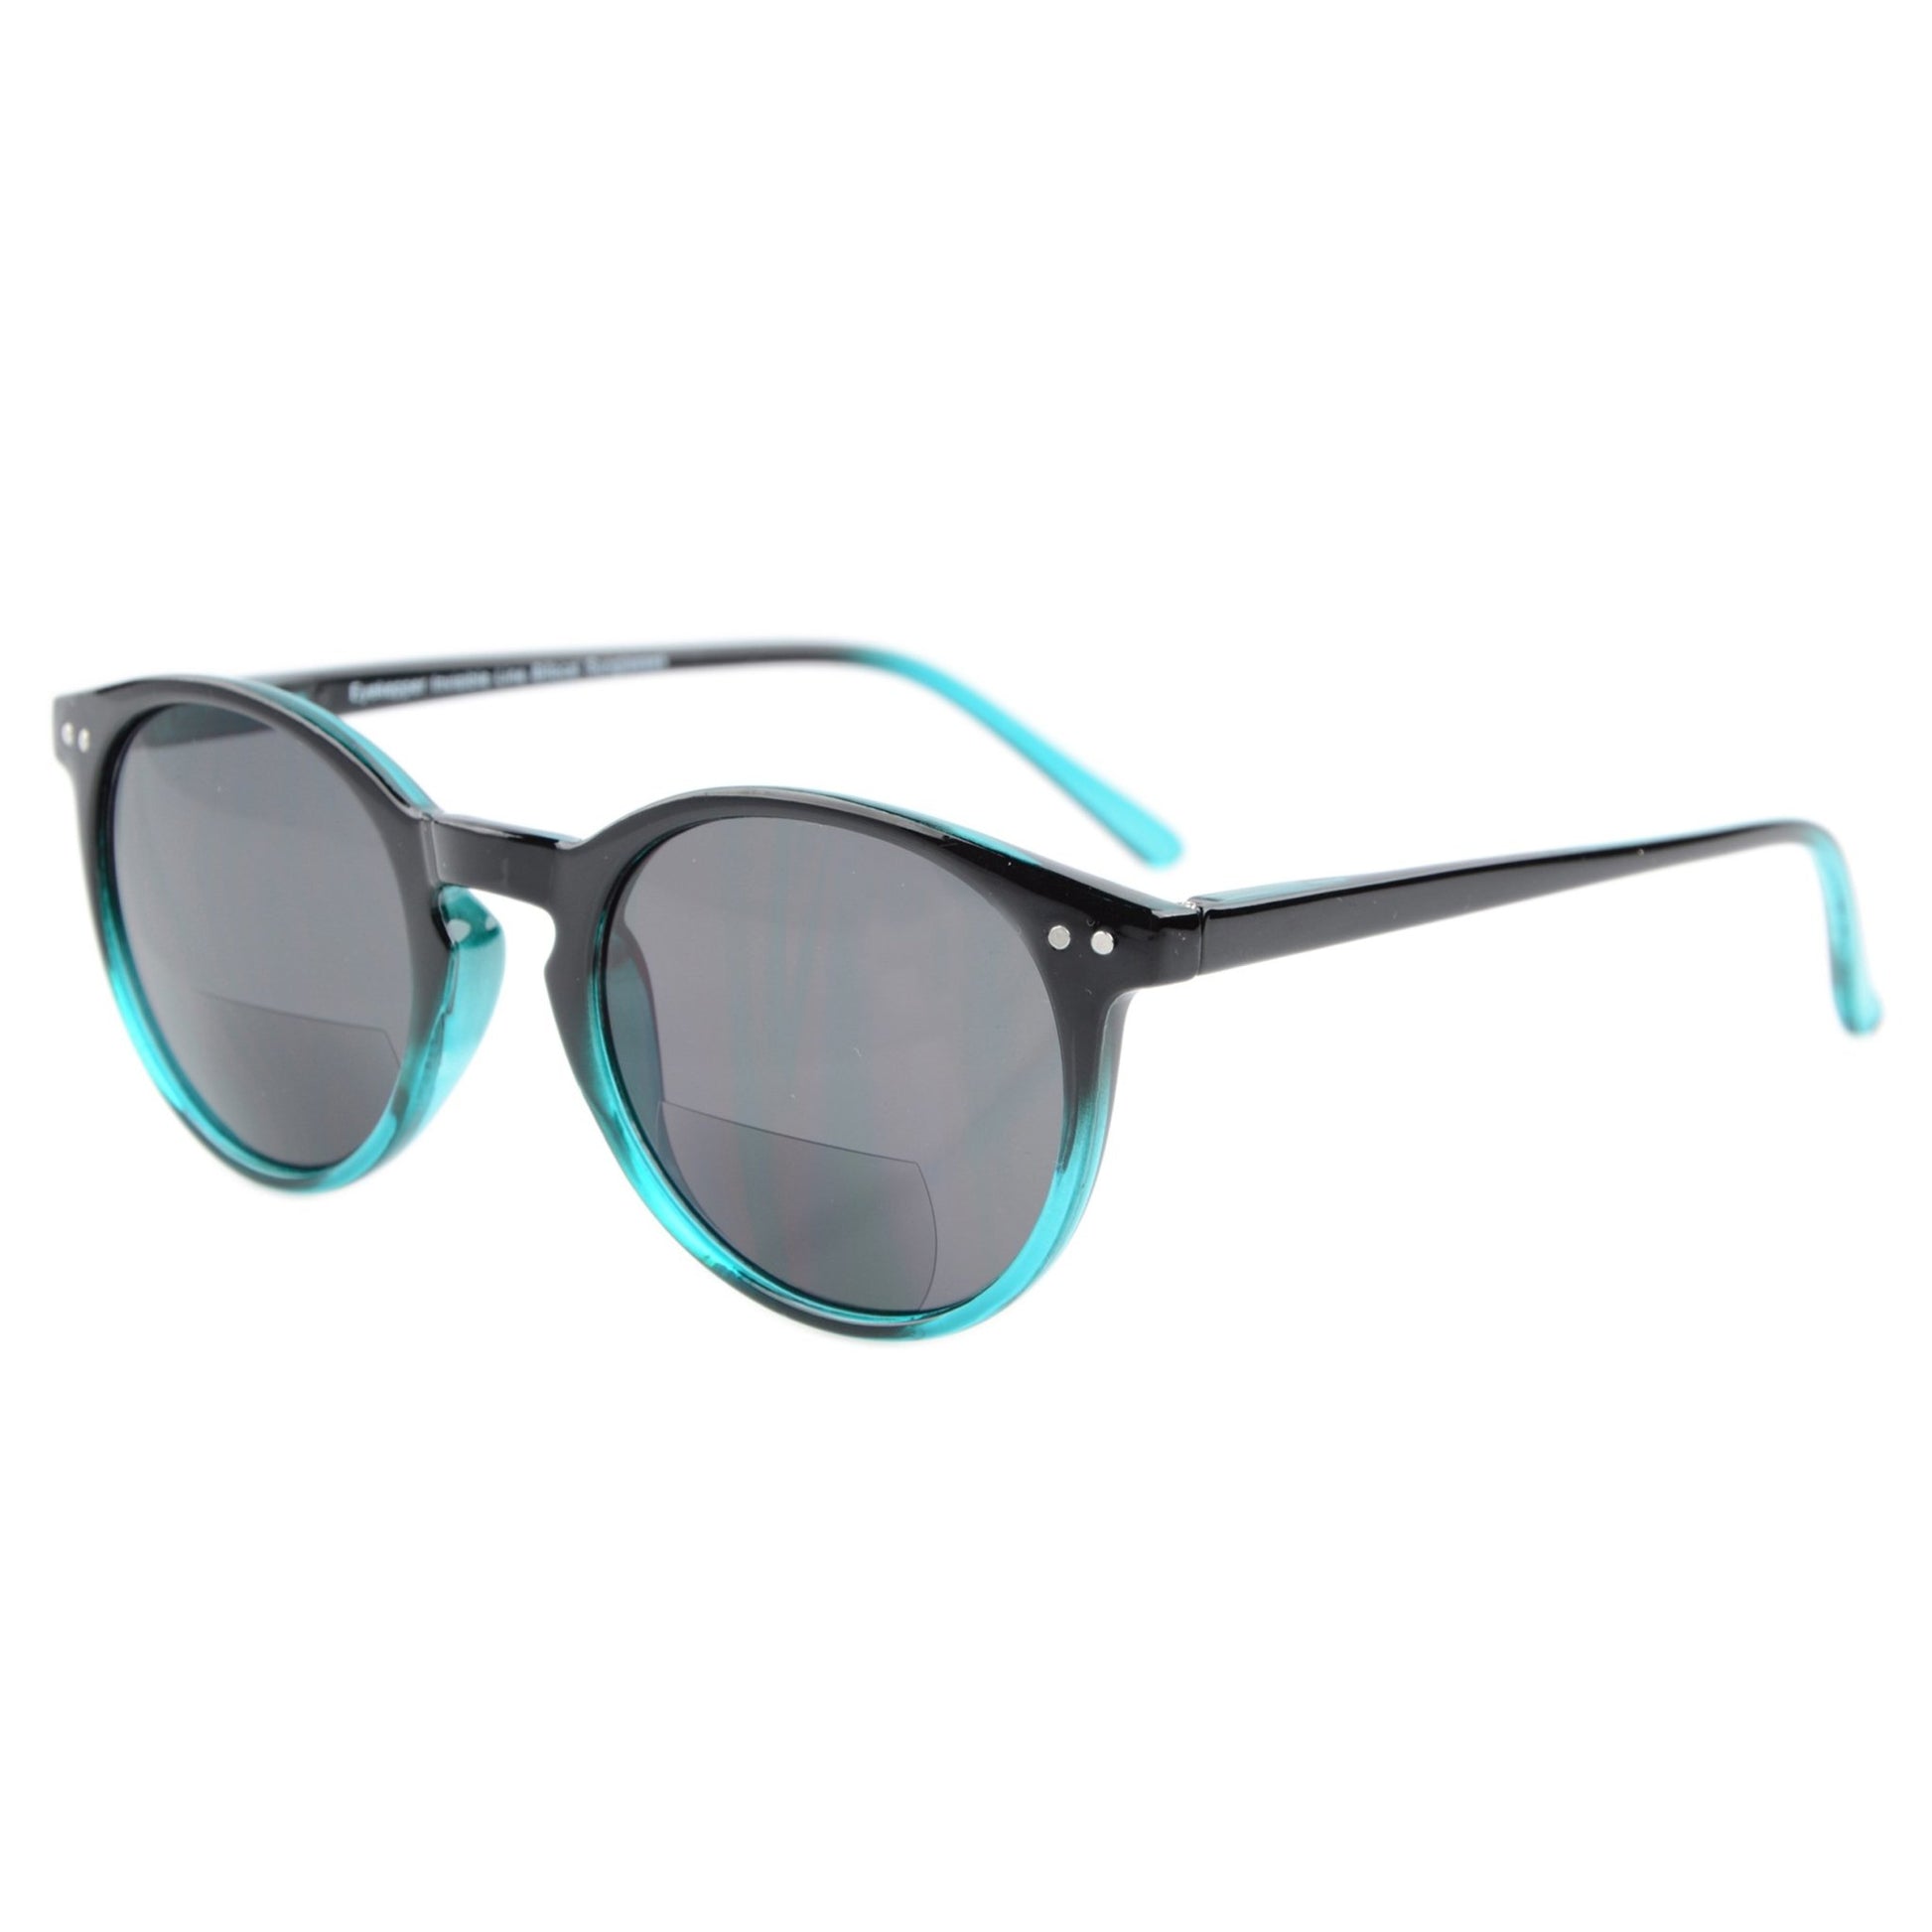 Key Hole Style Round Bifocal Sunglasses Black Green S005